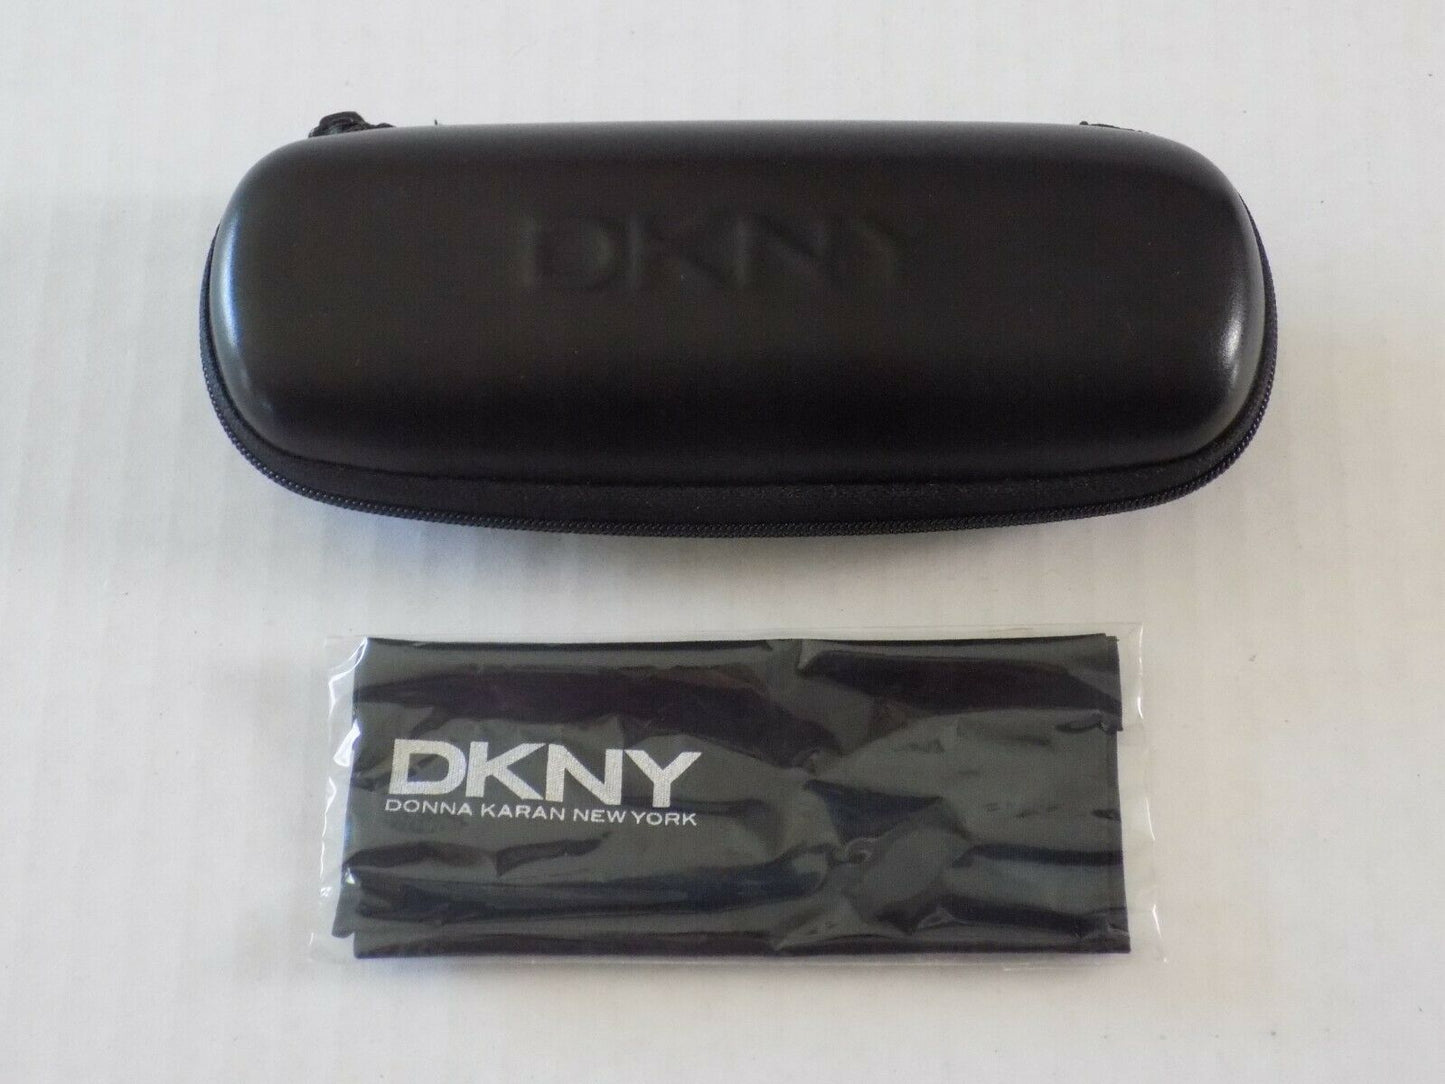 DKNY DK1027-272-53 53mm New Eyeglasses